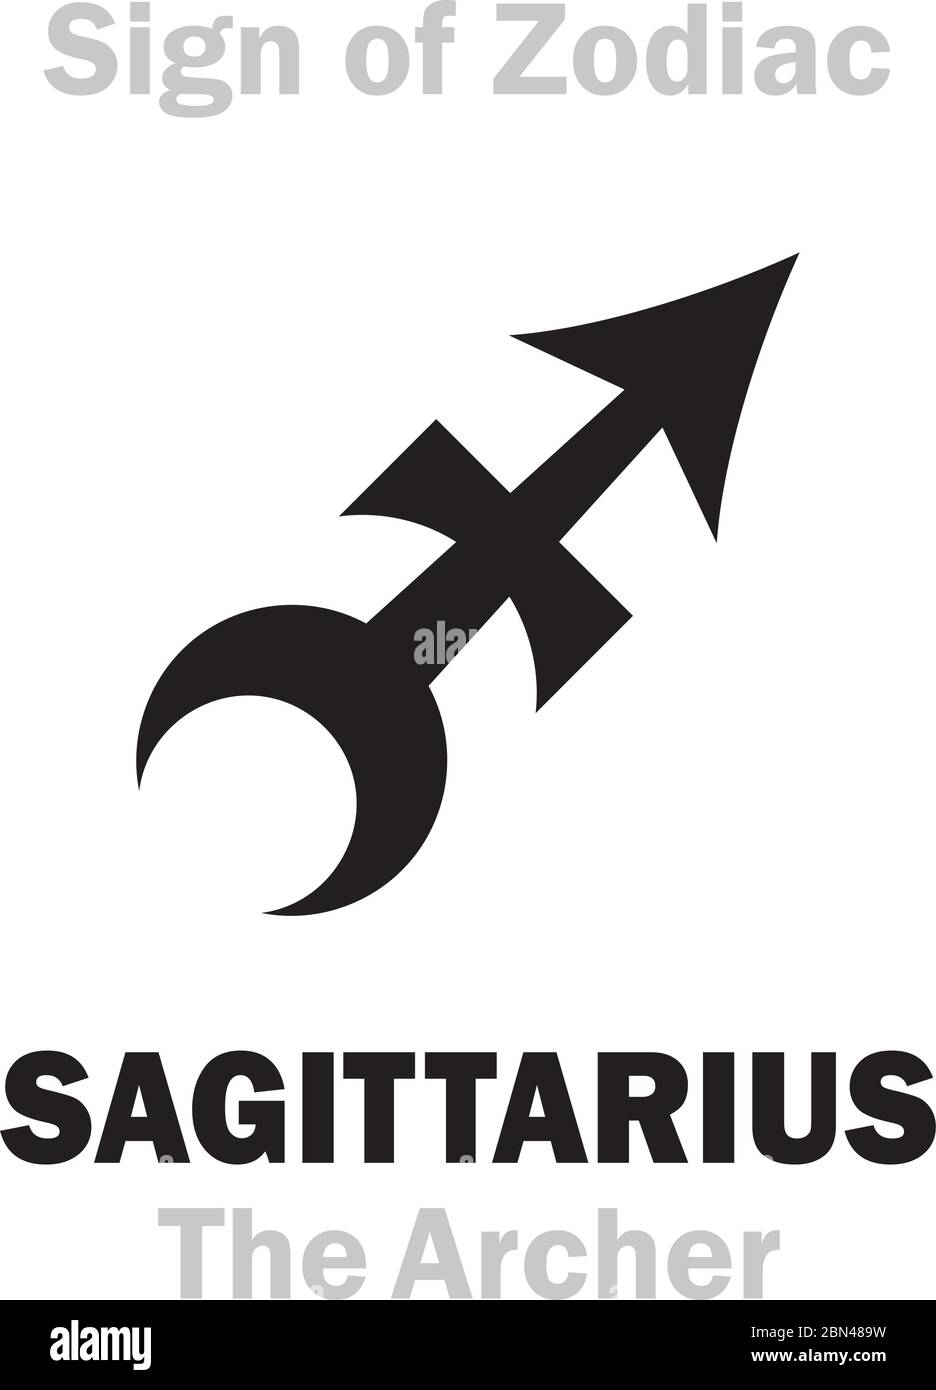 Astrology Alphabet: Sign of Zodiac SAGITTARIUS (The Archer). Astrological character, hieroglyphic sign (Czech medieval kabbalistic symbol). Stock Vector